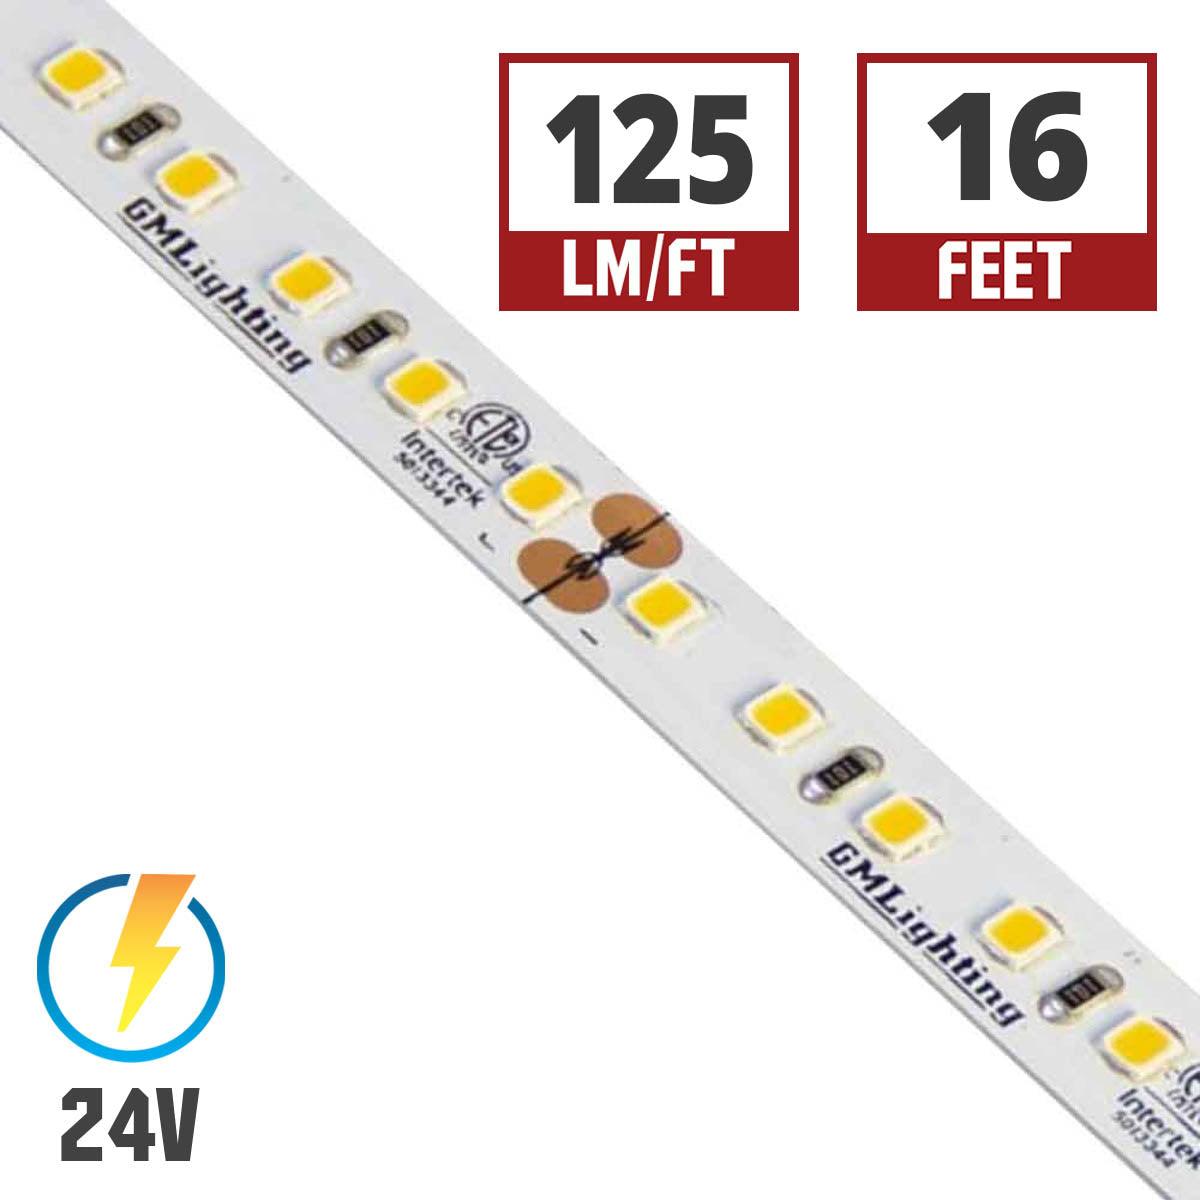 LTR-P Pro LED Strip Light, 1.5 Watts per Ft, 140 Lumens per Ft, 24V